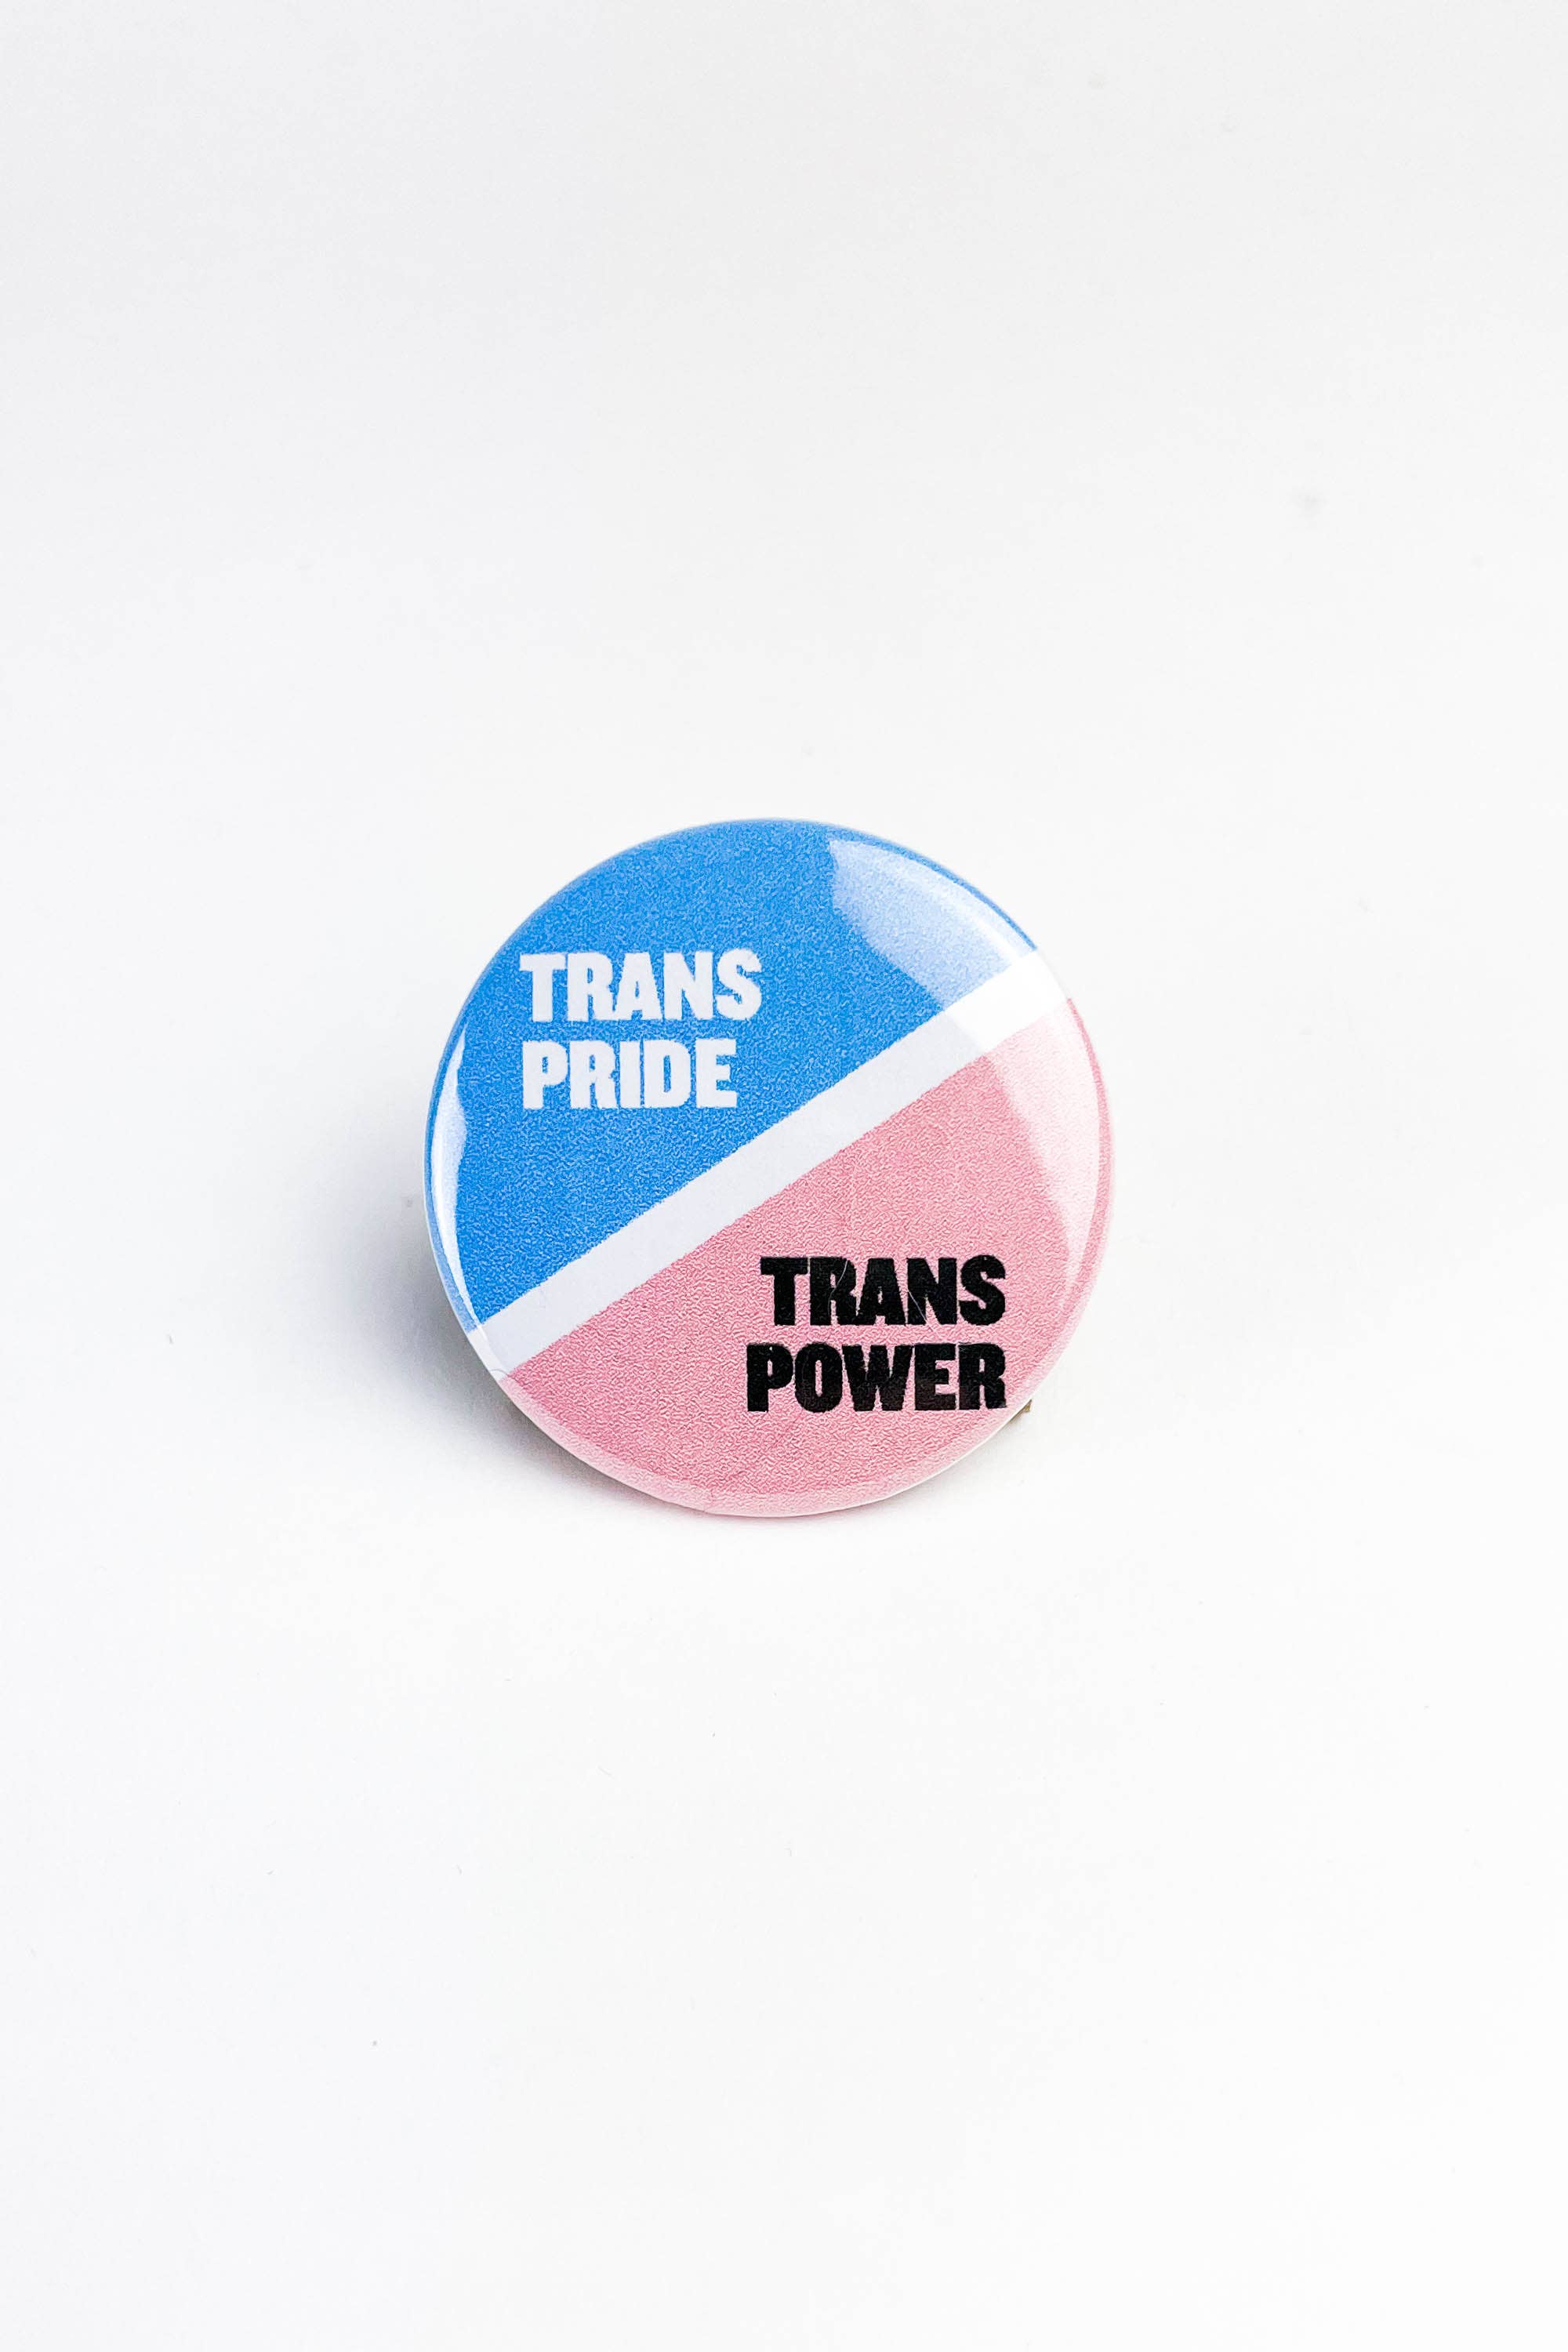 Trans Pride Trans Power Button